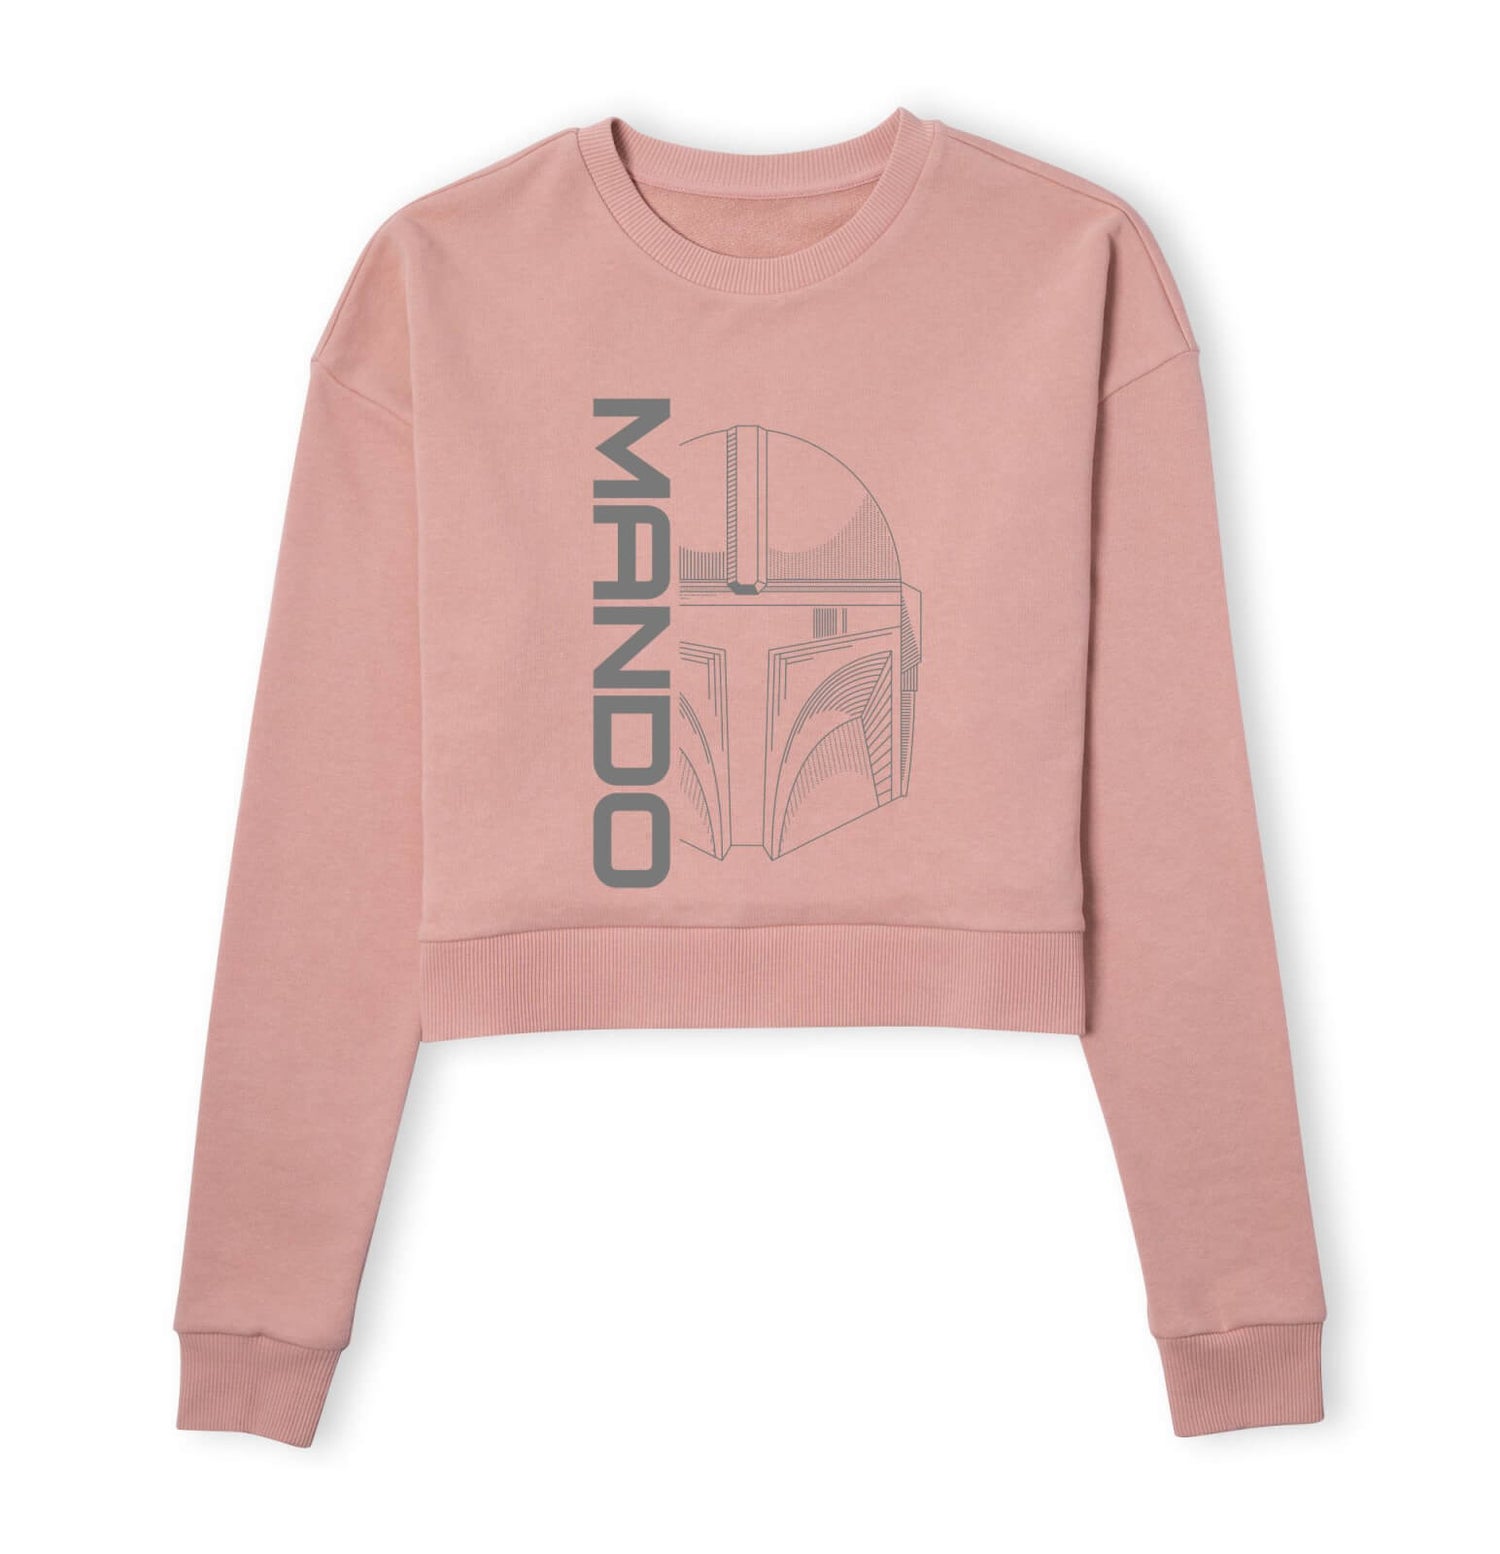 Star Wars The Mandalorian Mando Women's Cropped Sweatshirt - Dusty Pink